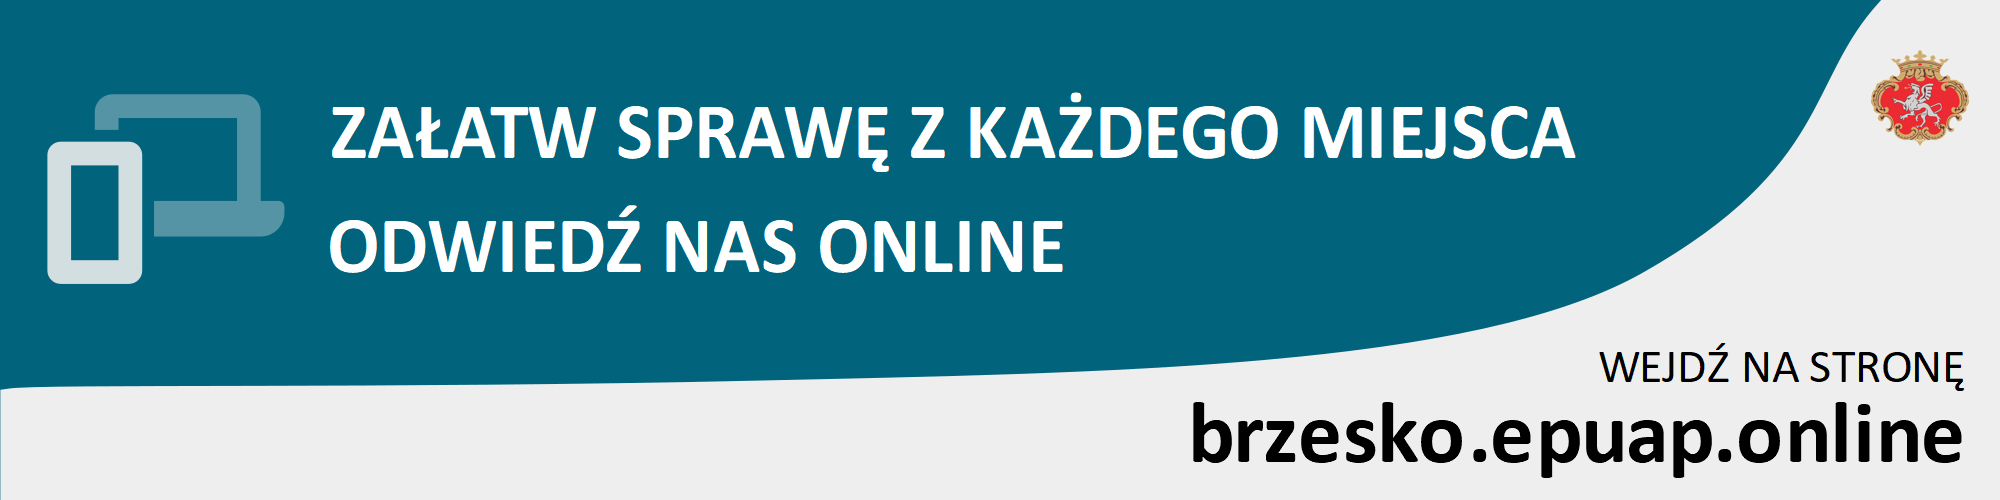 brzesko-online.png